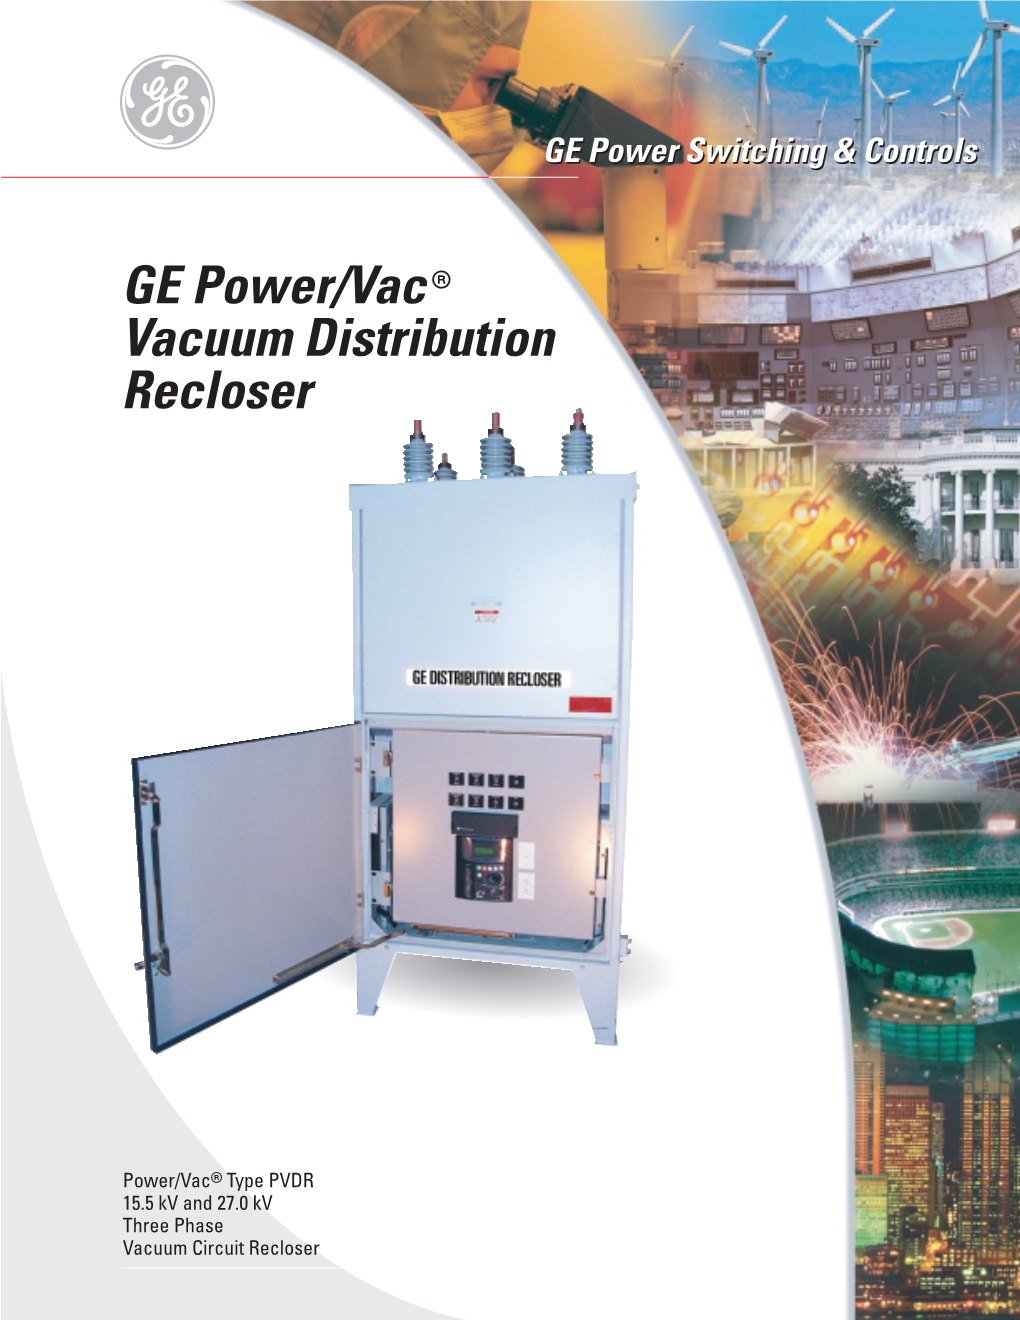 GE Power/Vac 7 Vacuum Distribution Recloser